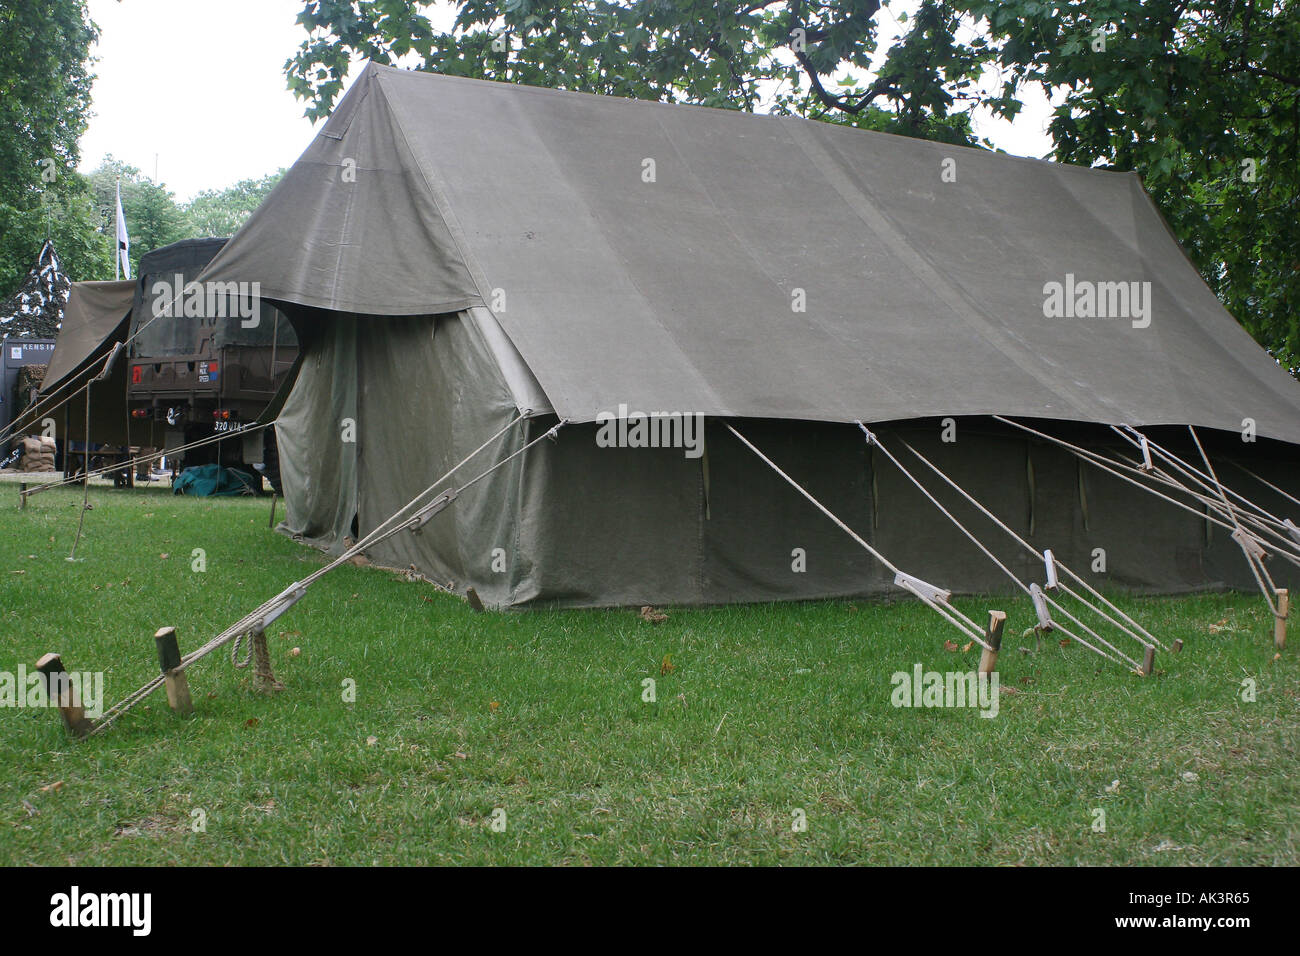 Authentic Second World War British military tent Stock Photo - Alamy